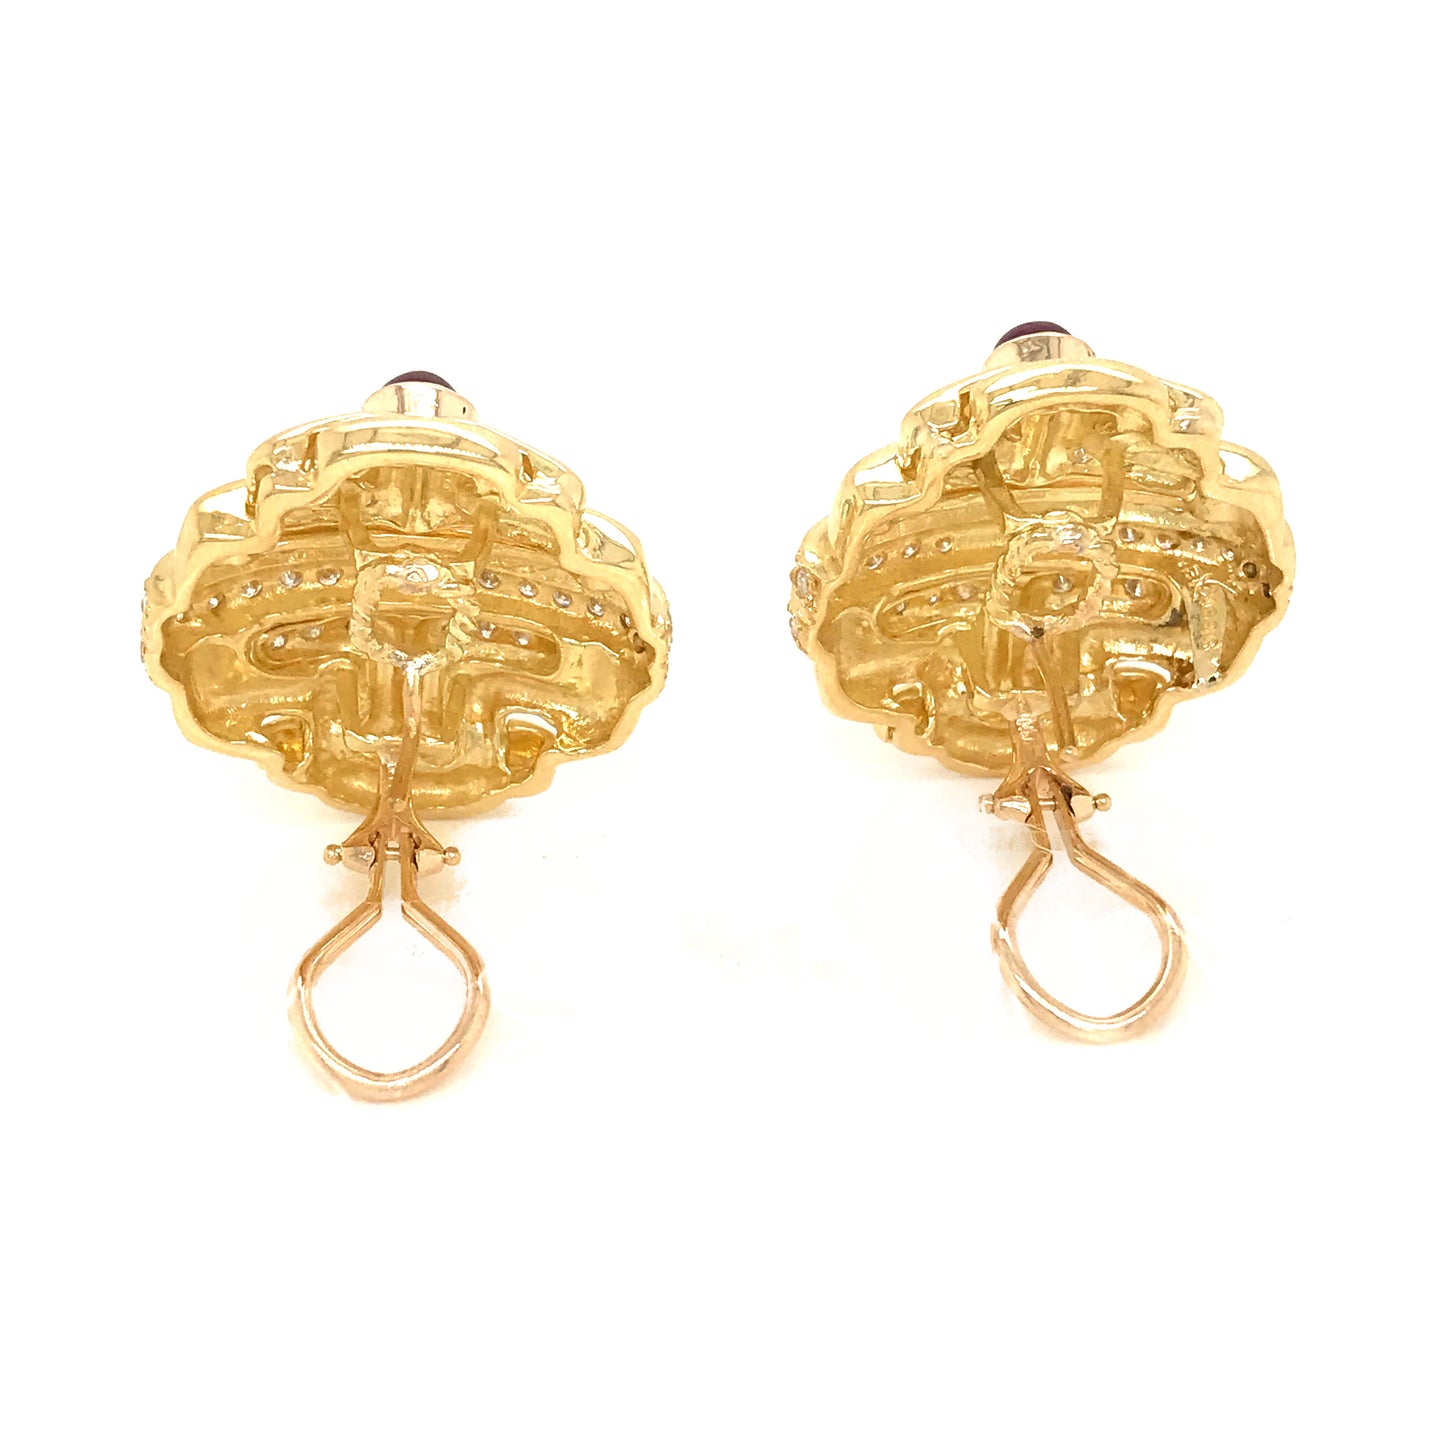 18k Yellow Gold Precious Stone and Diamond Earrings